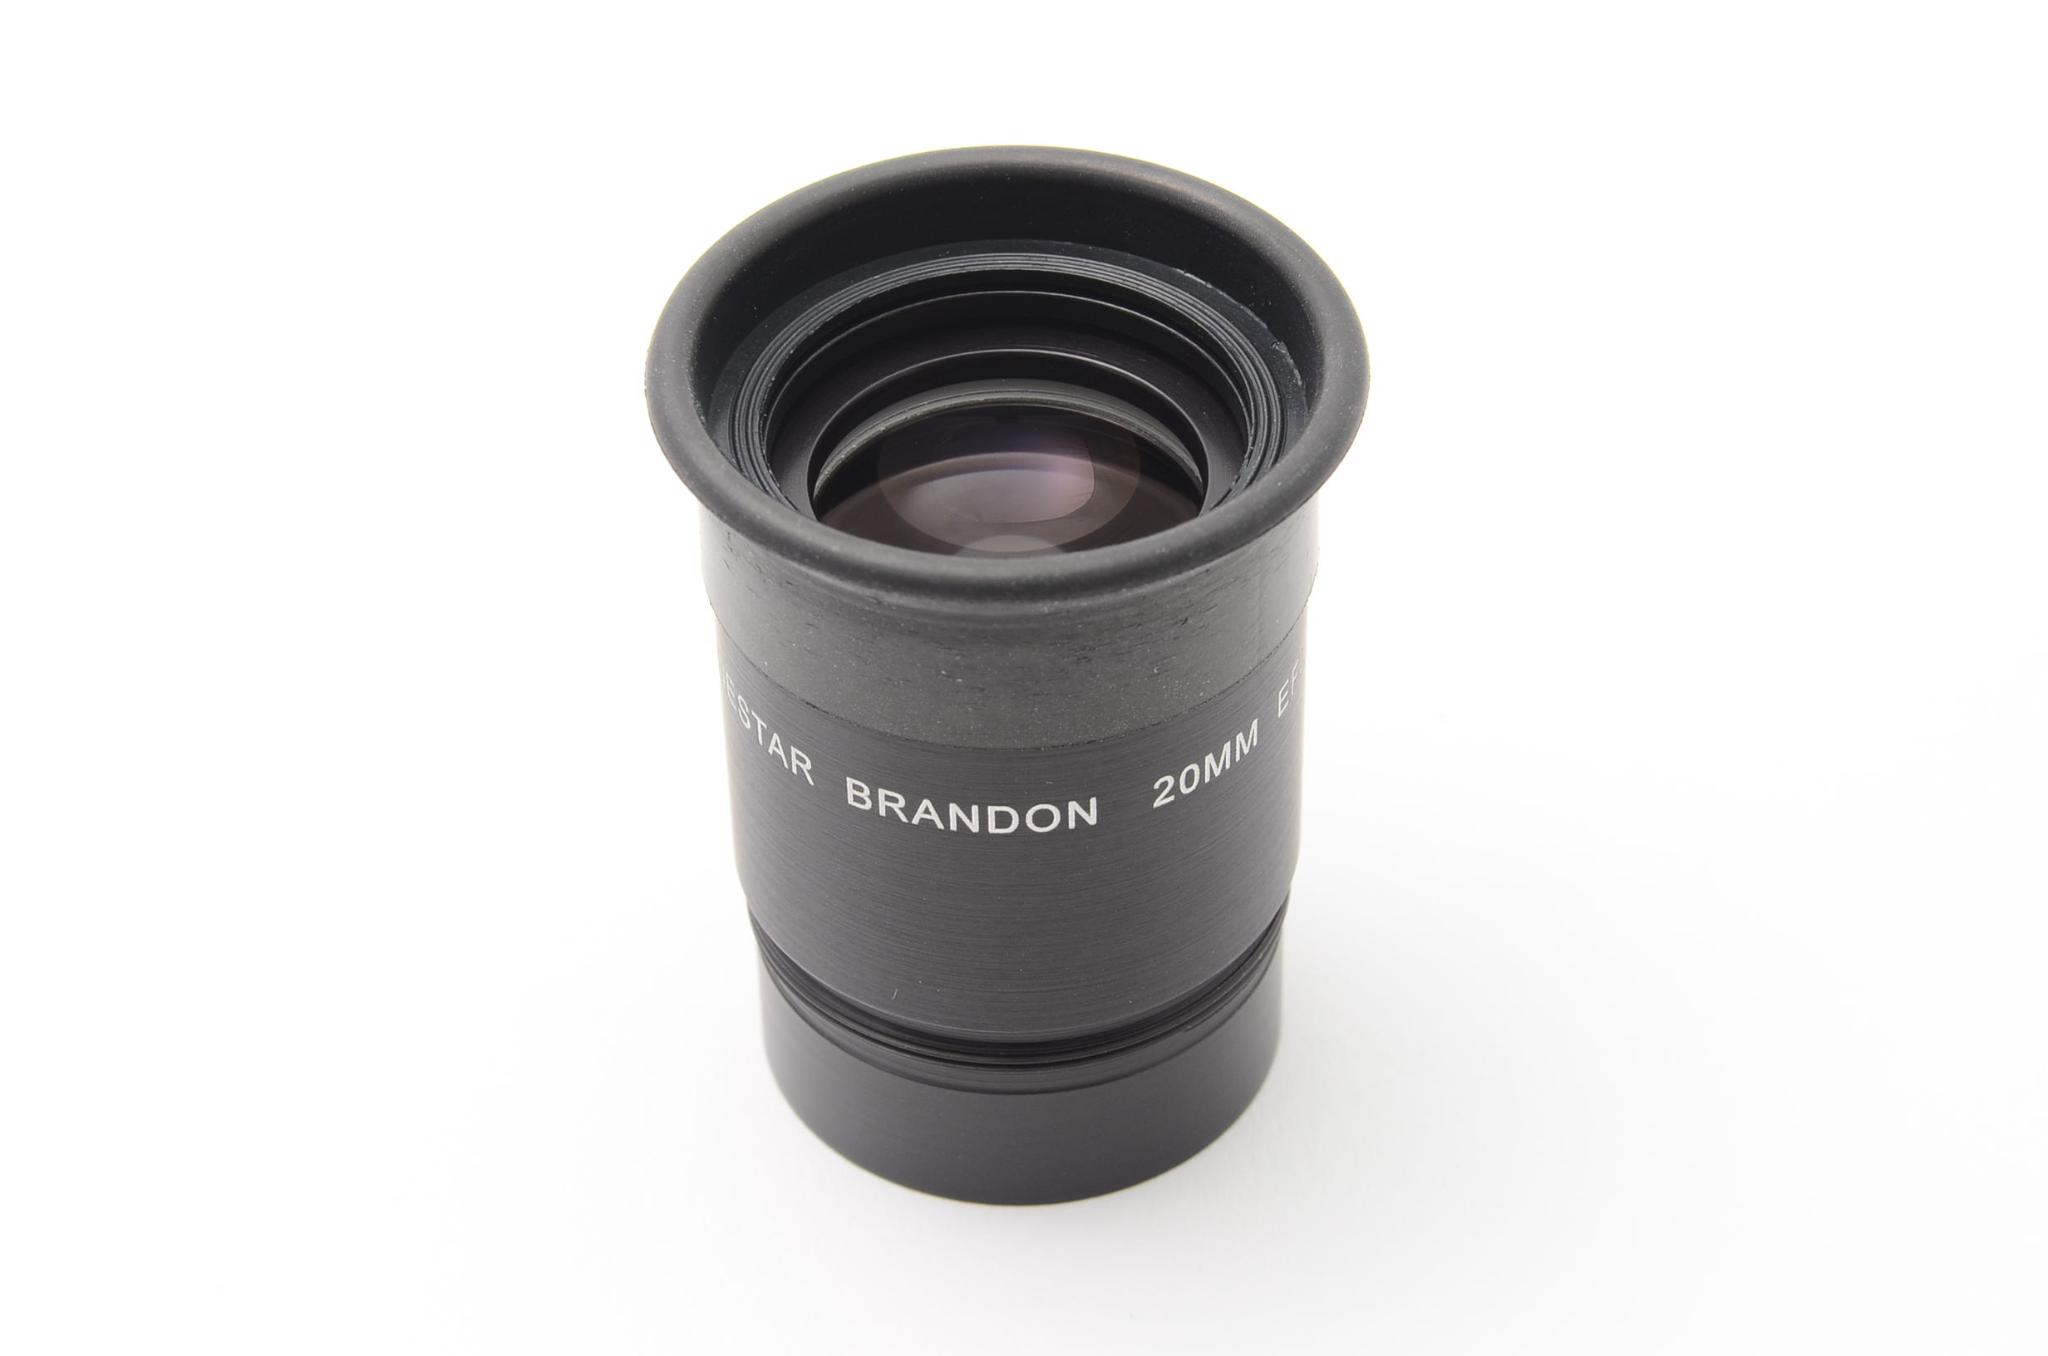 Brandon 20mm Questar with eye cup 1.25" threaded telescope eyepiece